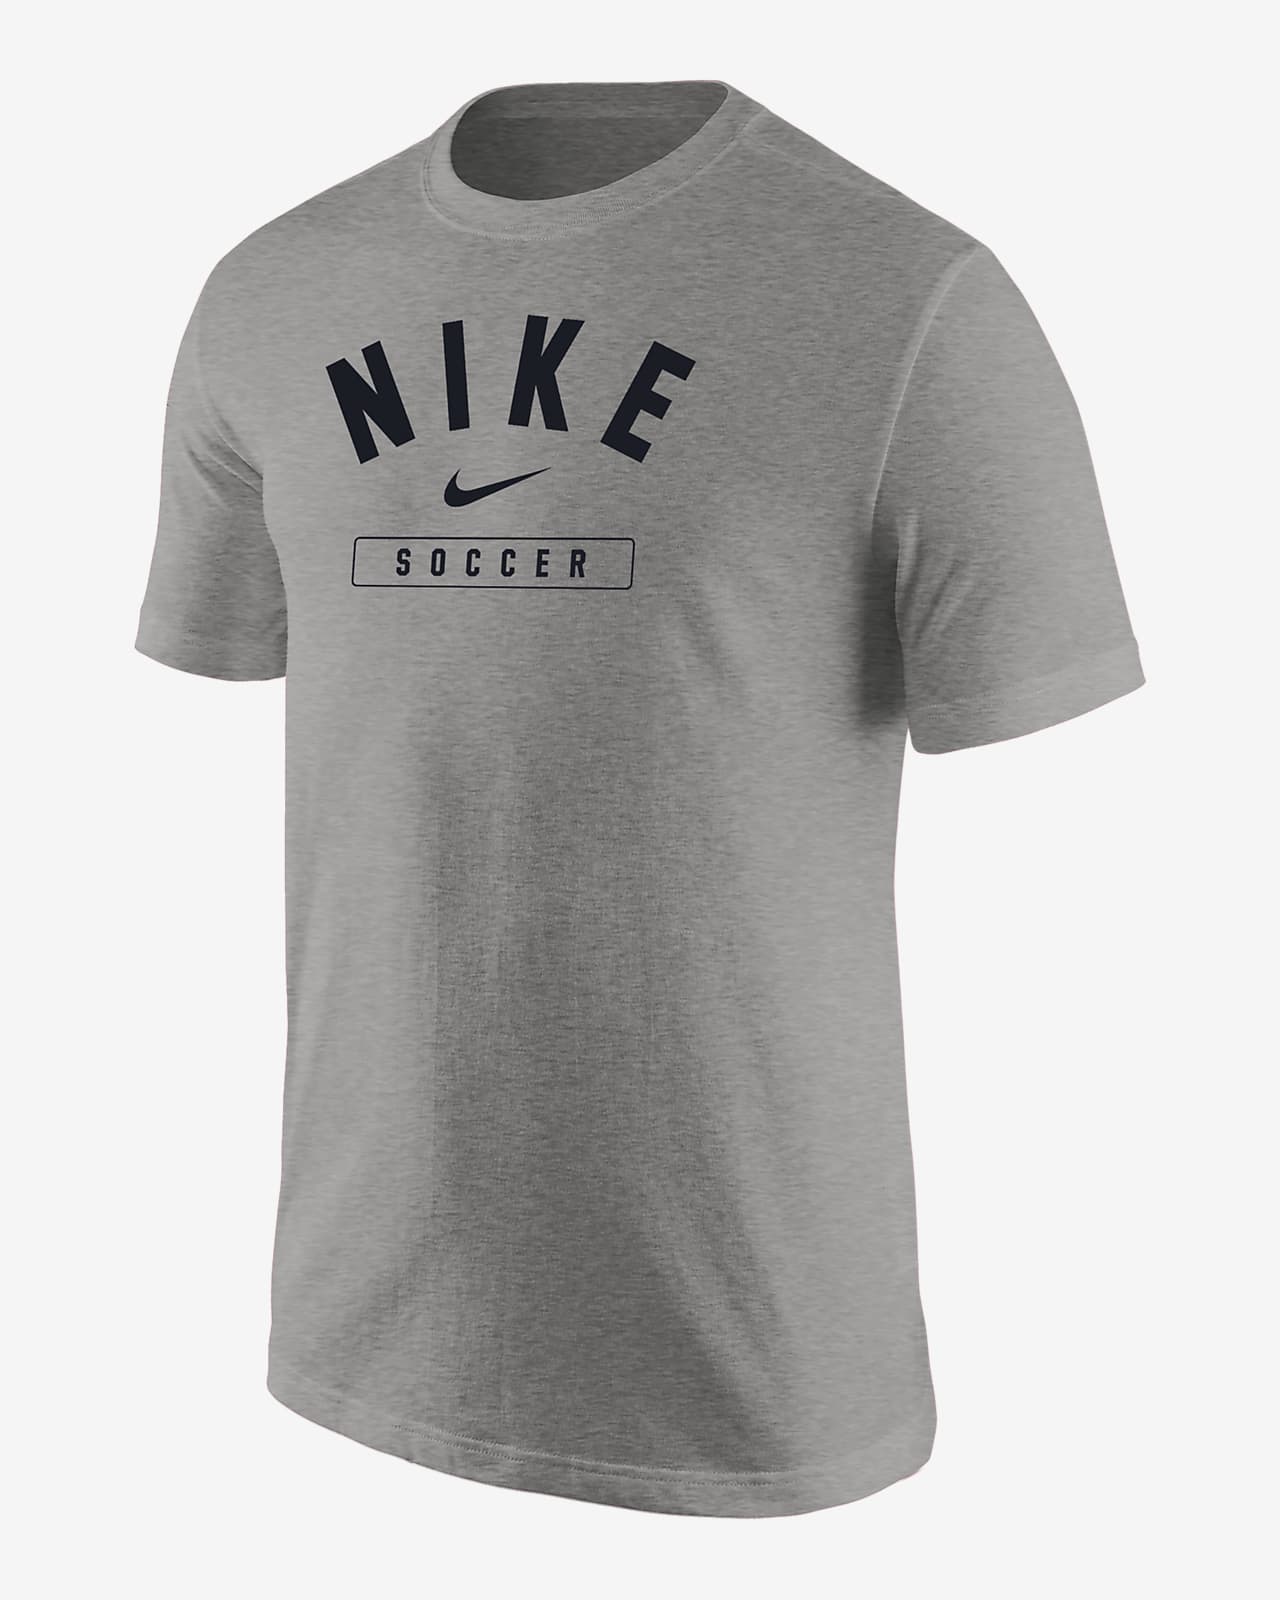 Nike Swoosh Men's Soccer T-Shirt